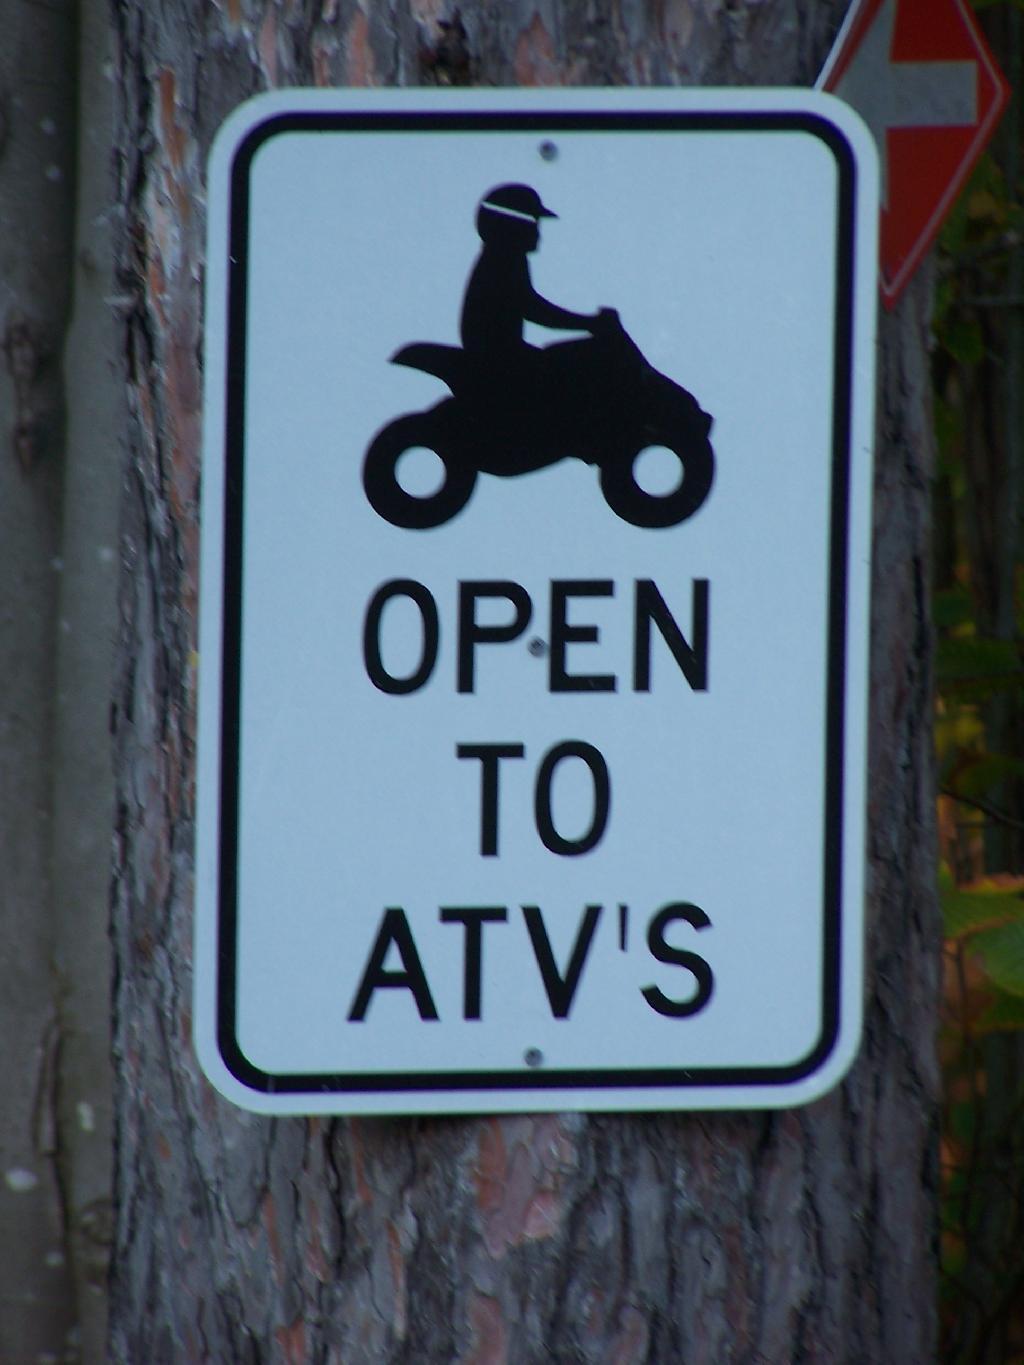 ATV Use on Local Roads